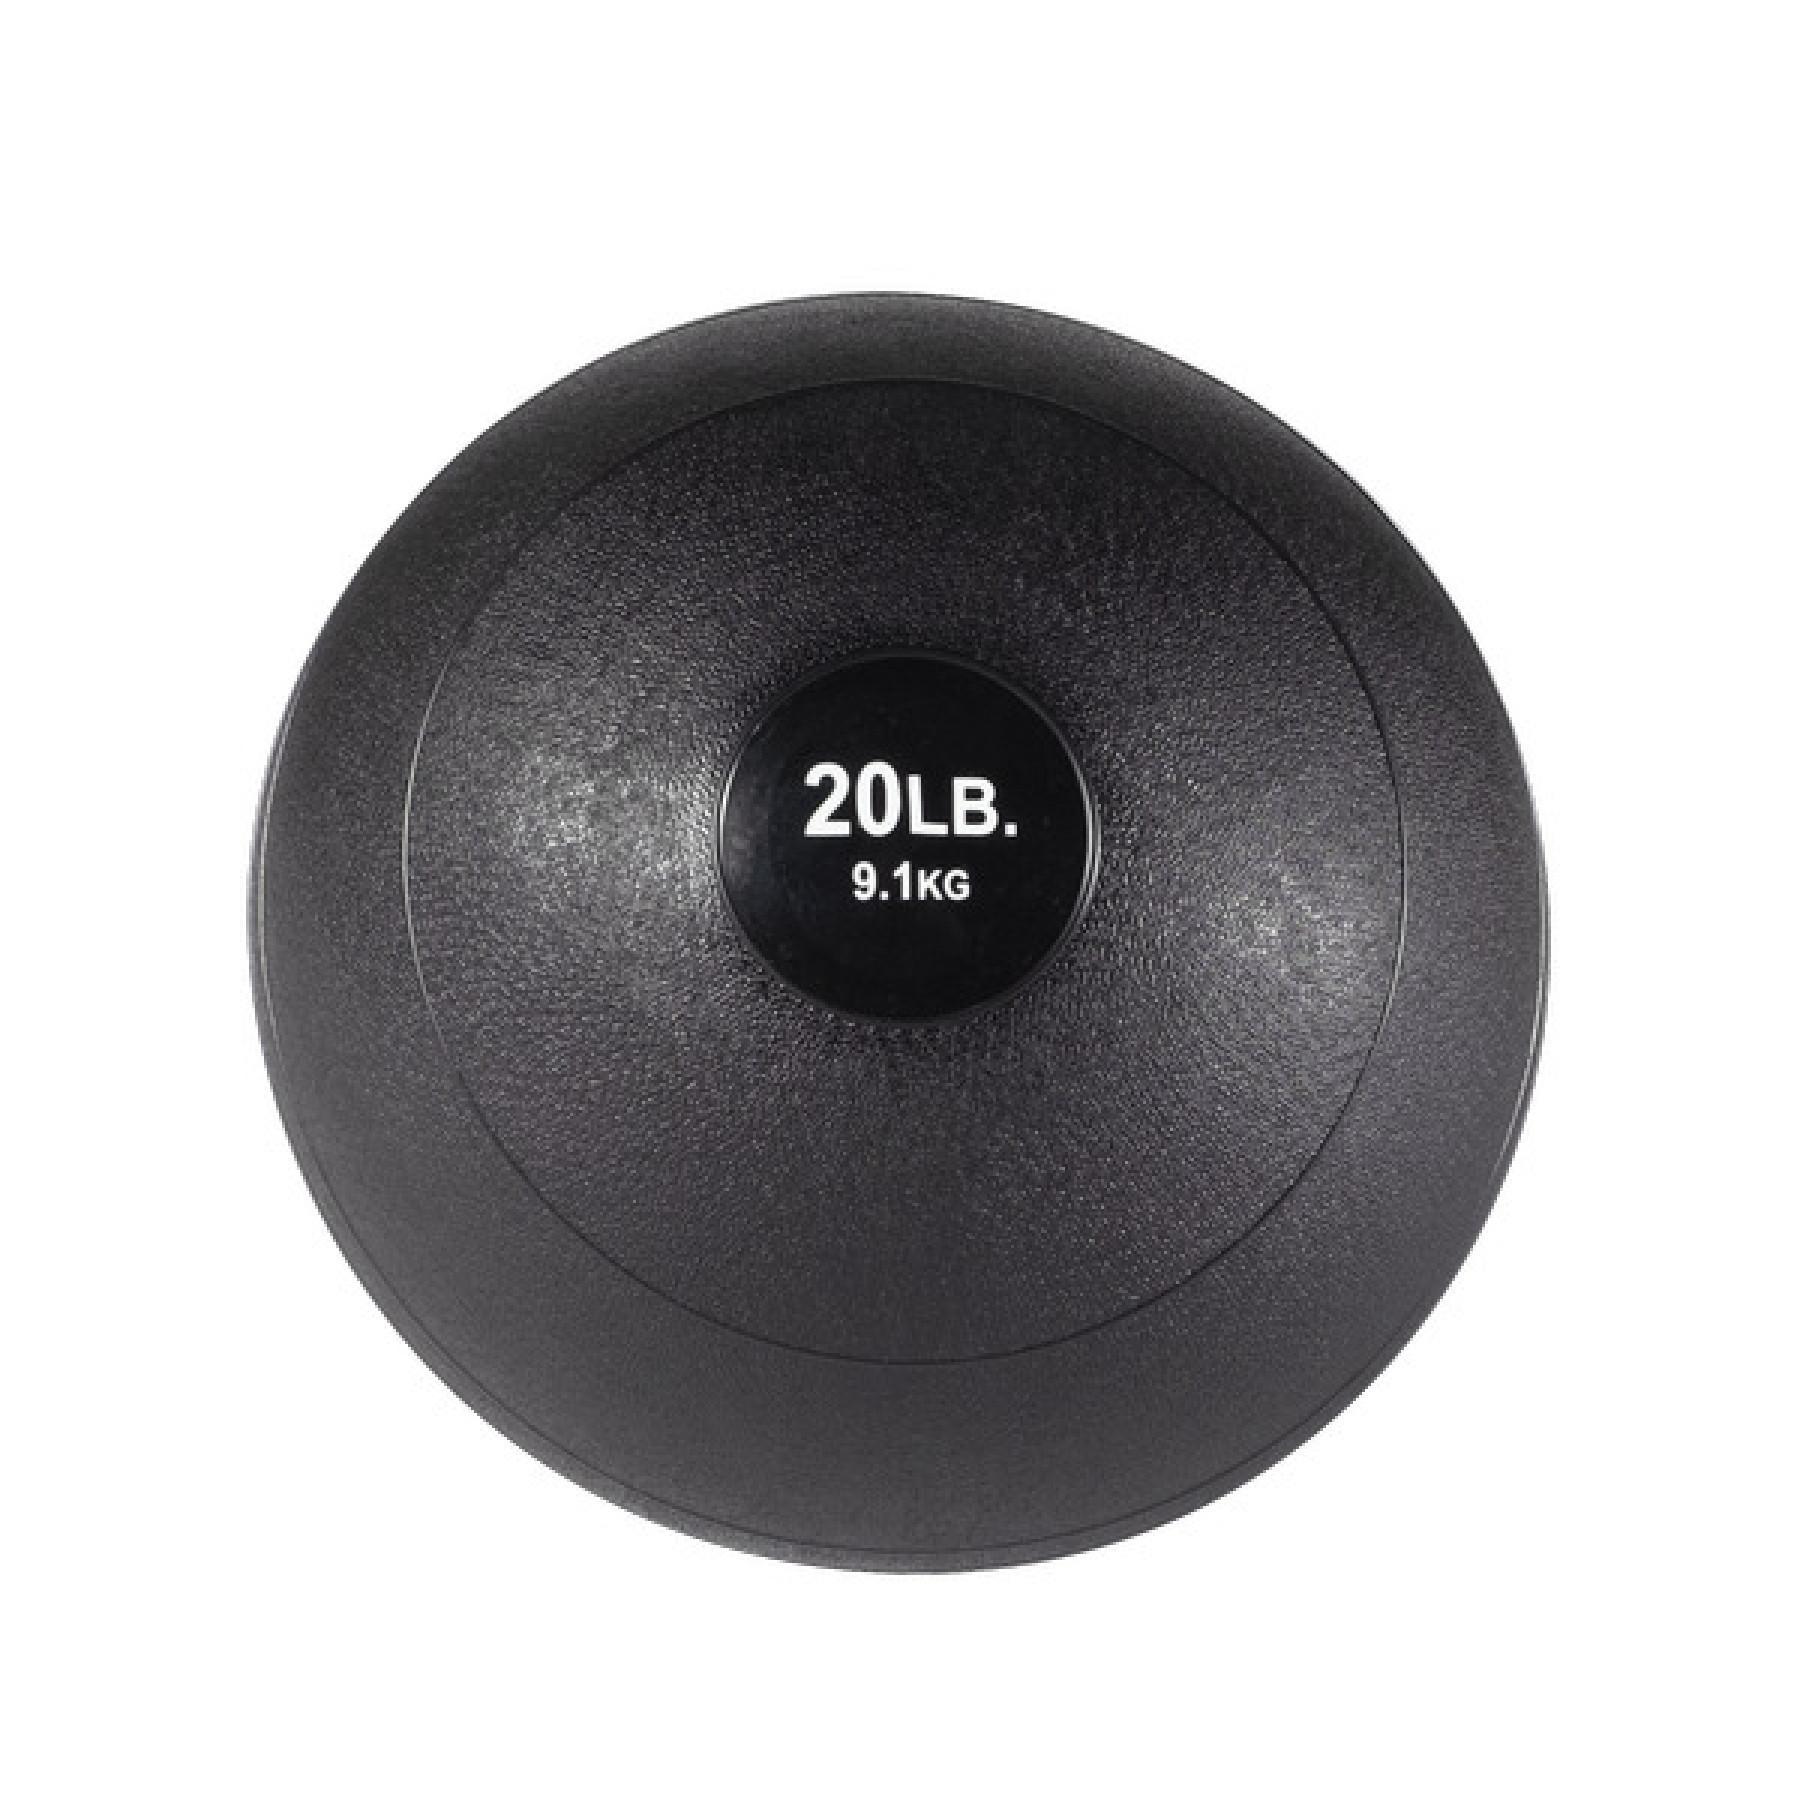 Esfera Slam 25 lb - 11,3 kg Body Solid